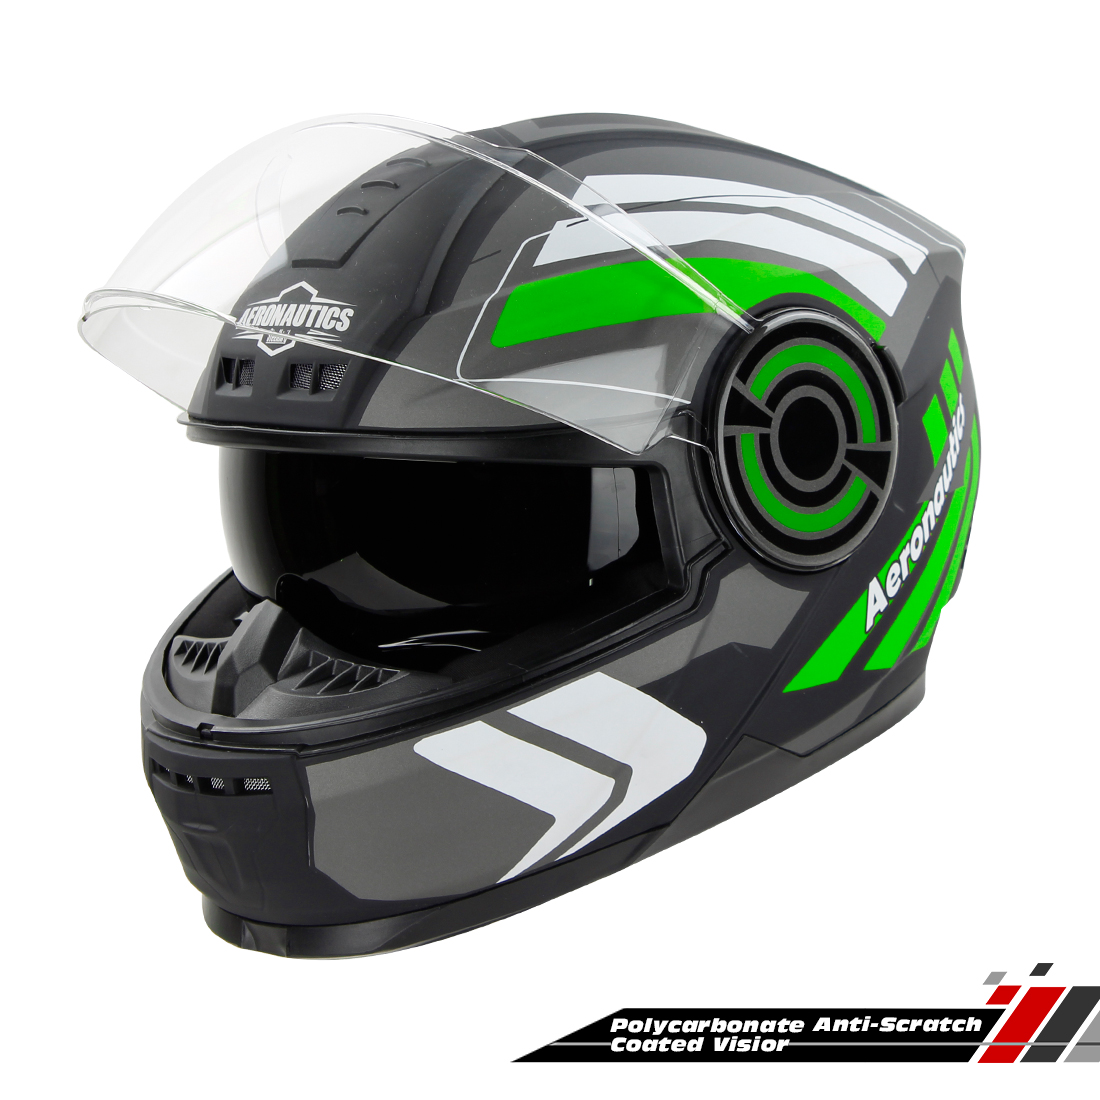 Steelbird SBH-40 Vanguard ISI Certified Full Face Graphic Helmet For Men And Women With Inner Sun Shield (Matt Black Green)